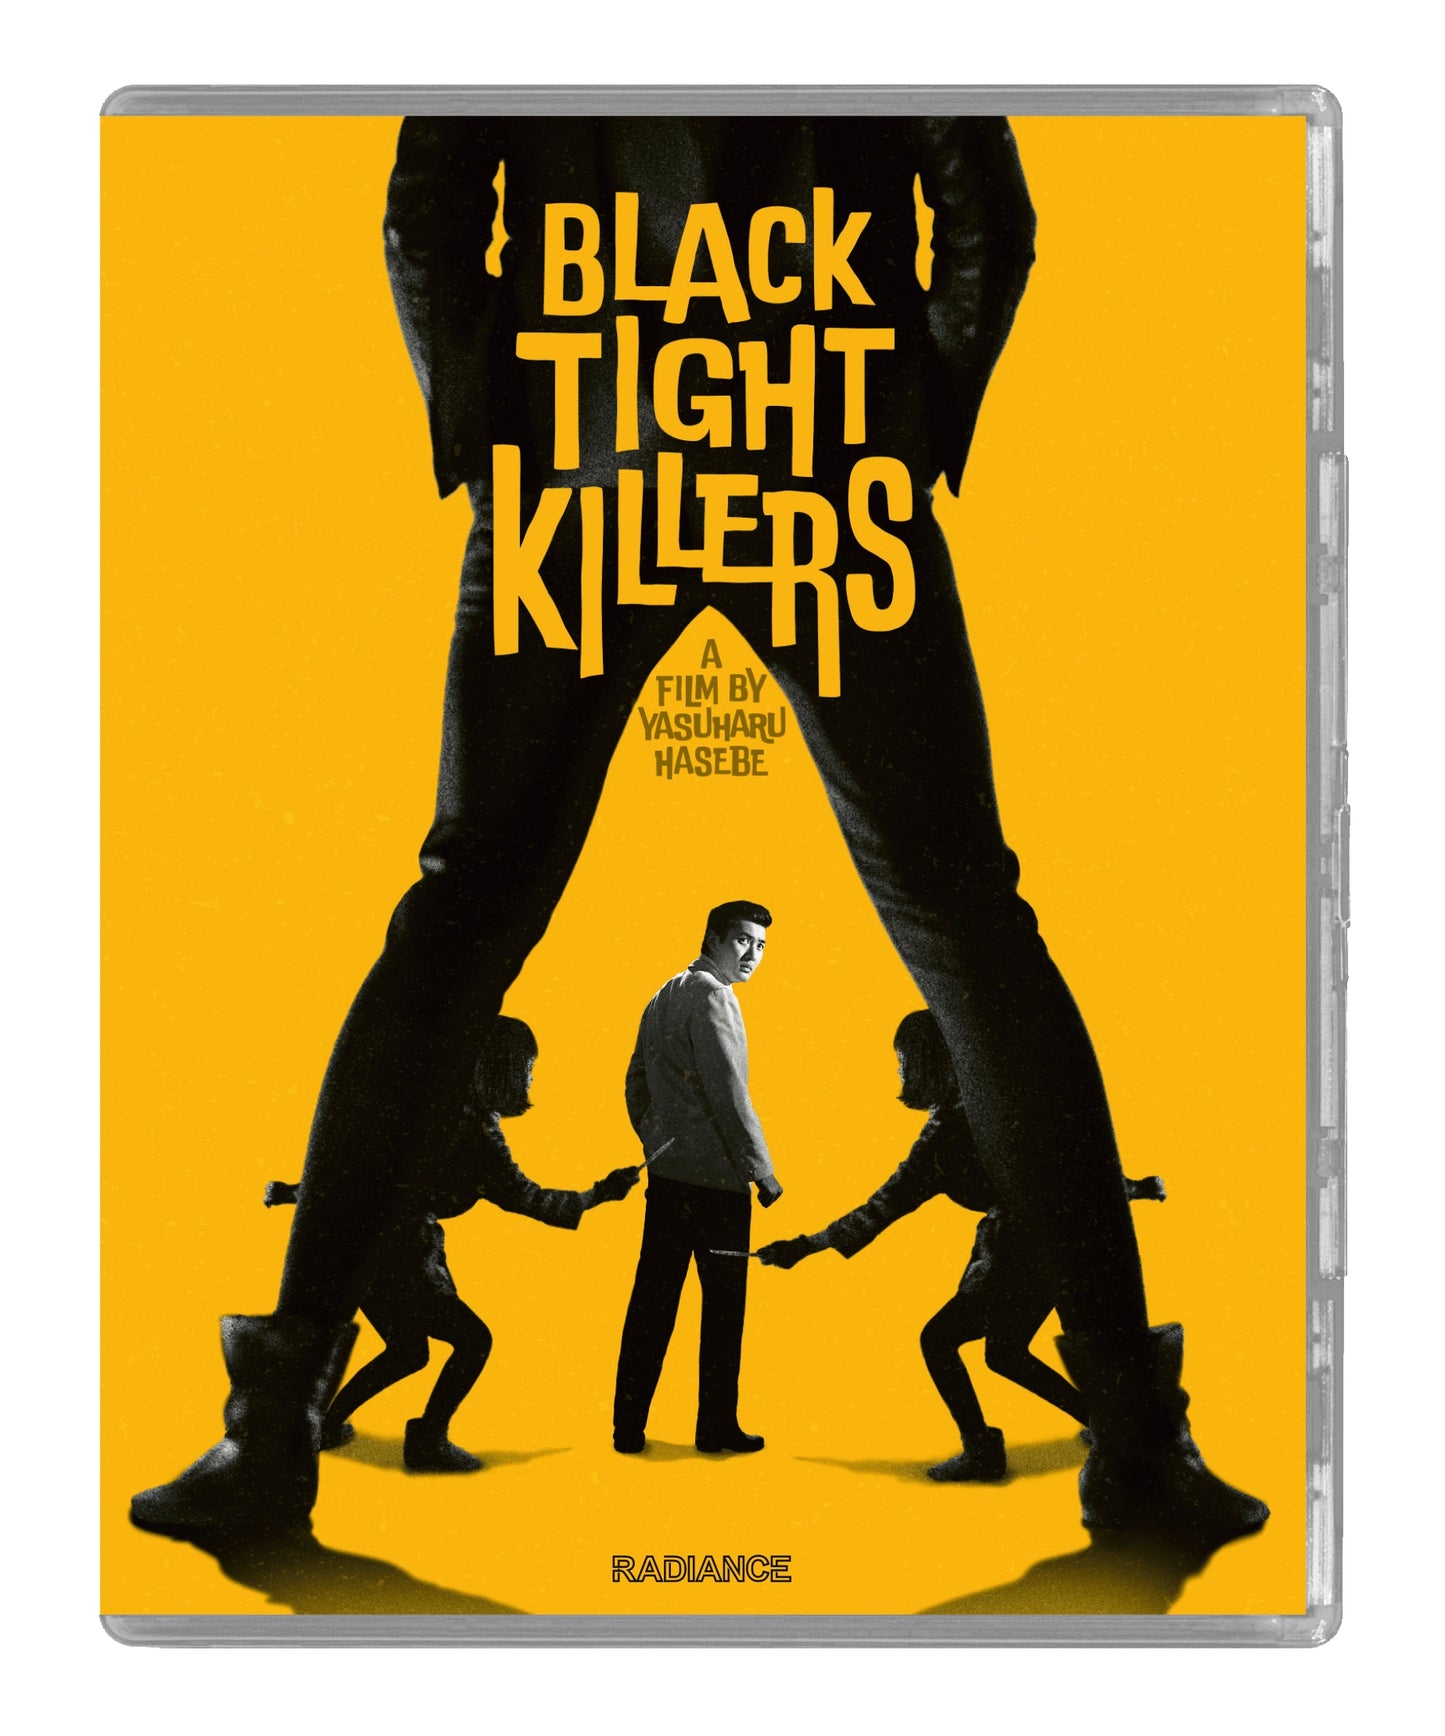 Black Tight Killers Limited Edition Blu-ray (Radiance U.S.)